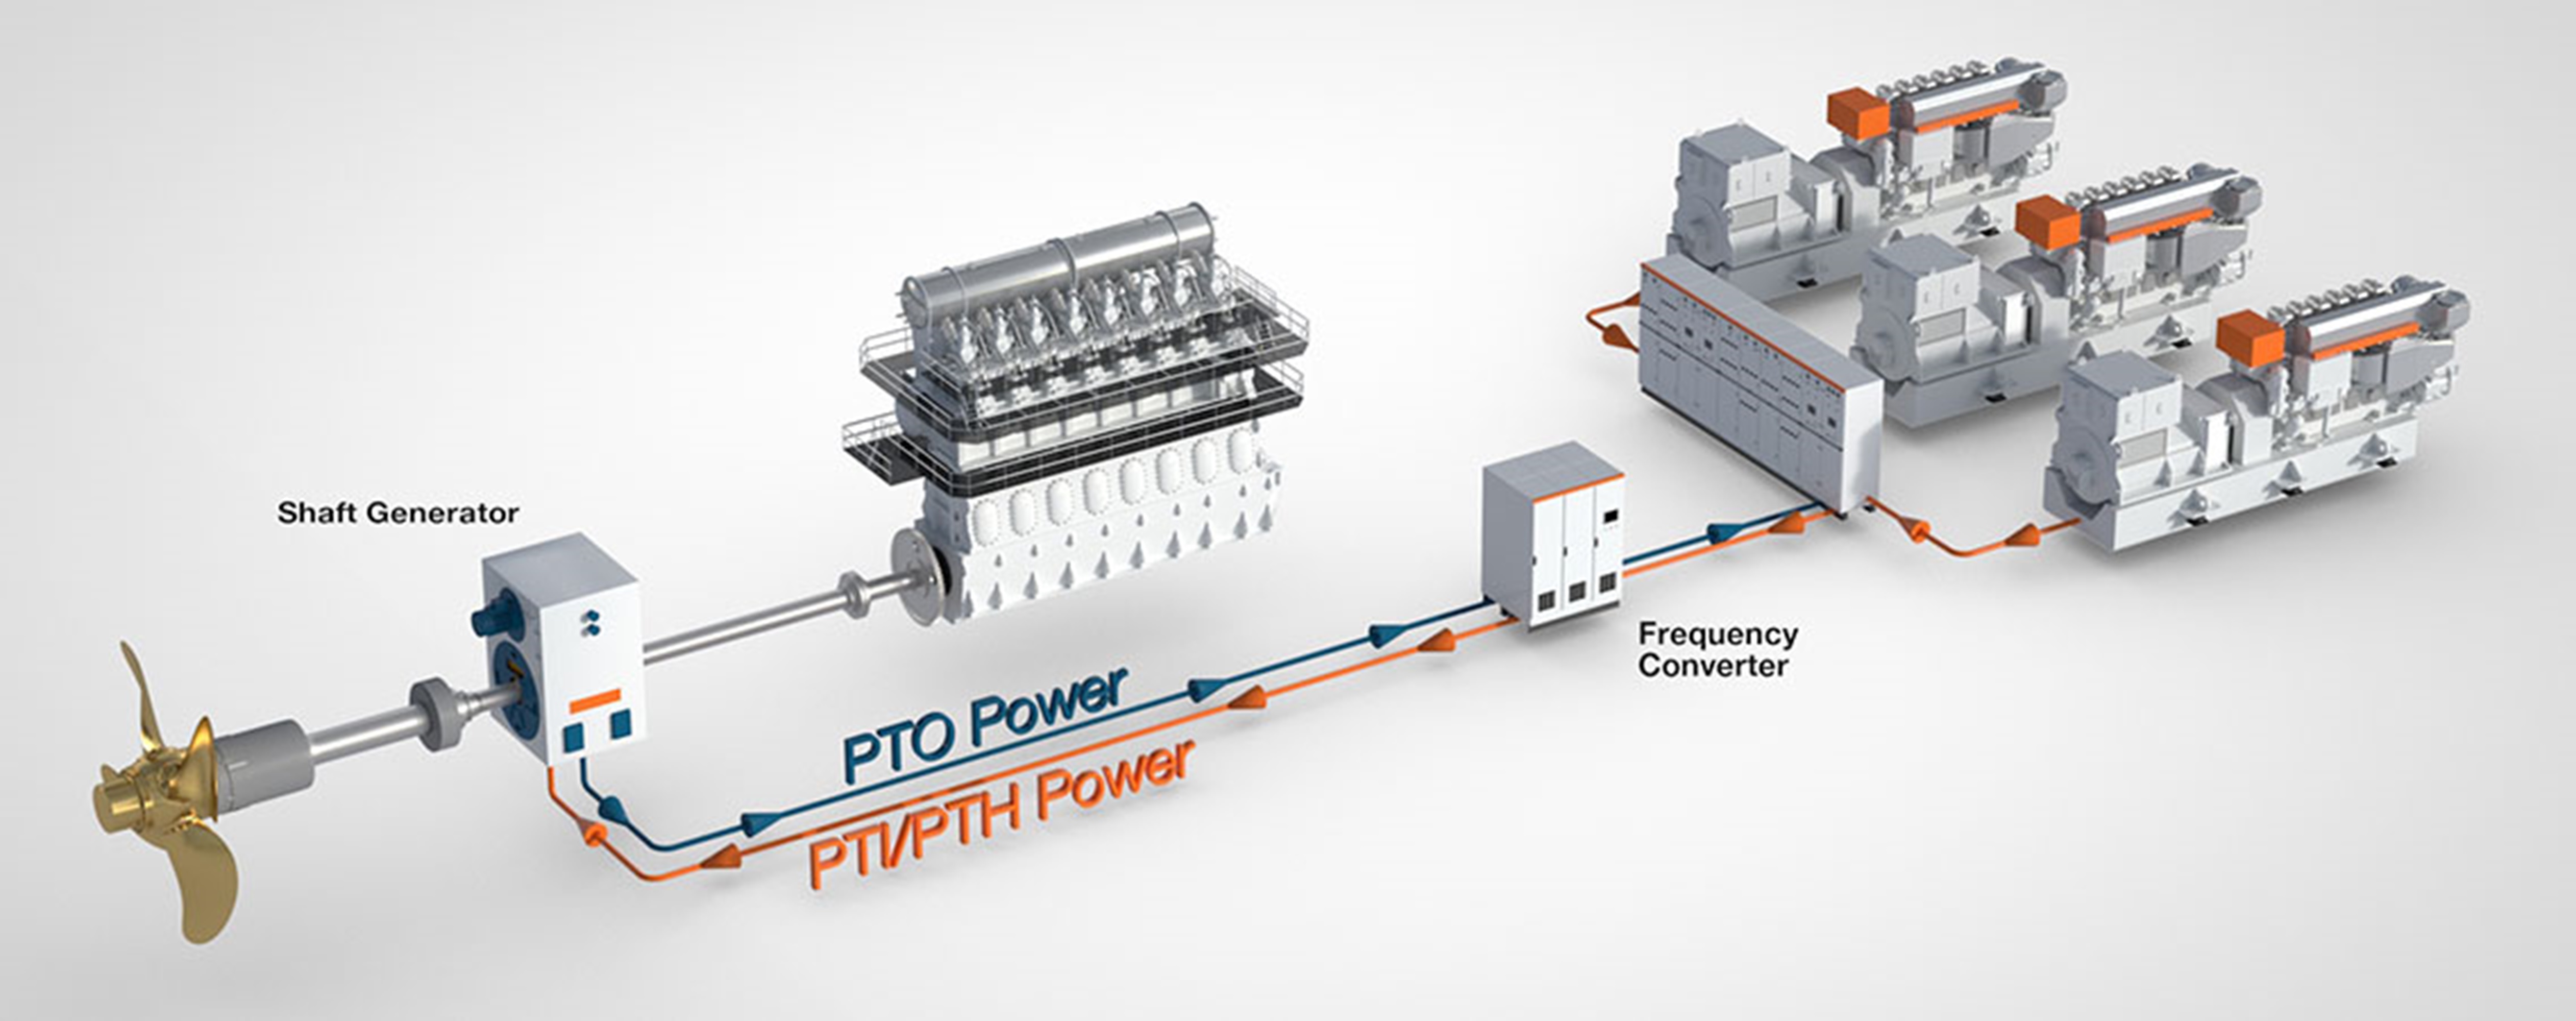 Wärtsilä Shaft Generator - economical electrical power generation